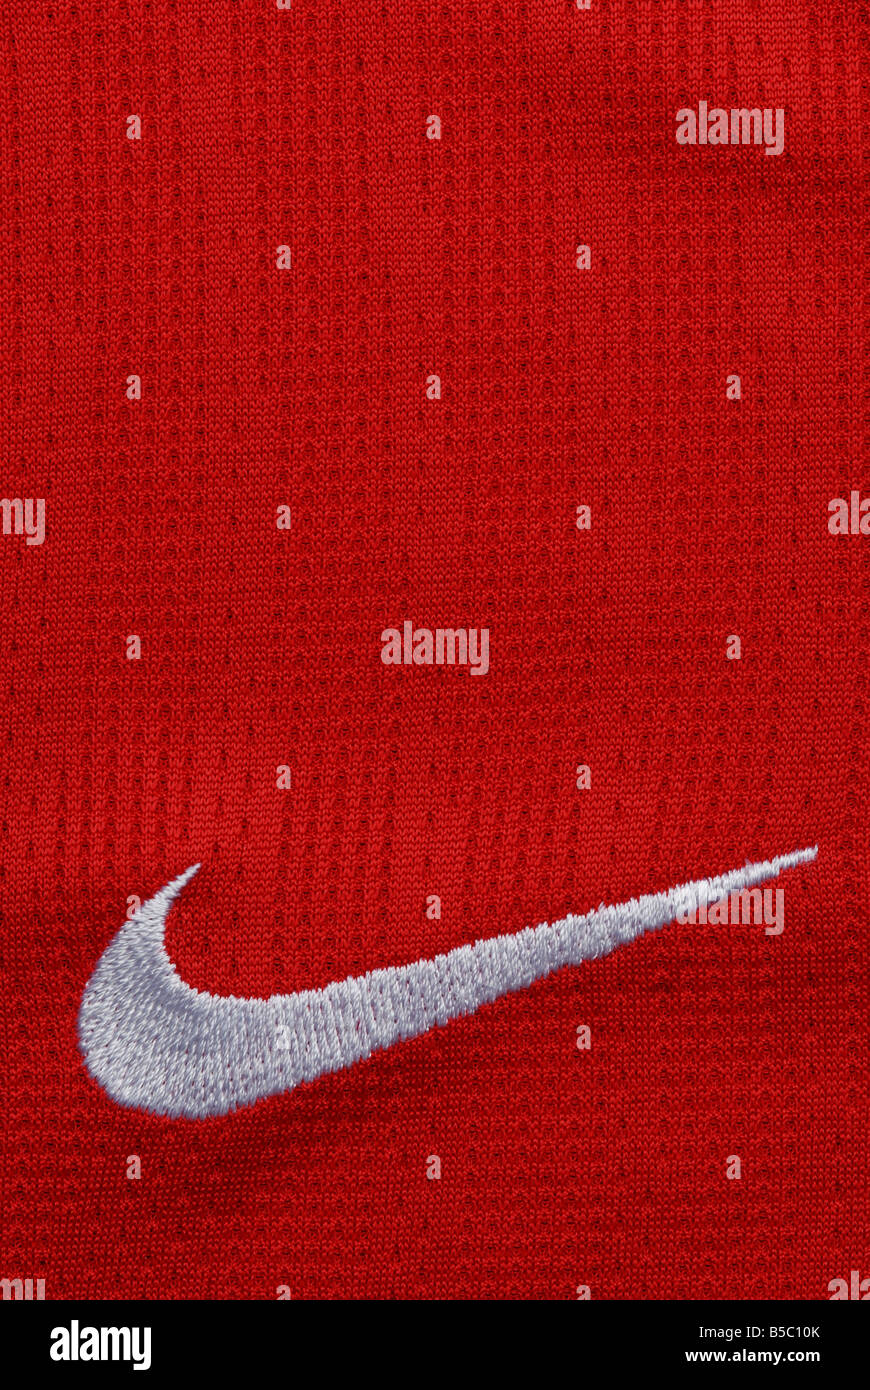 Nike tick -Fotos und -Bildmaterial in hoher Auflösung – Alamy